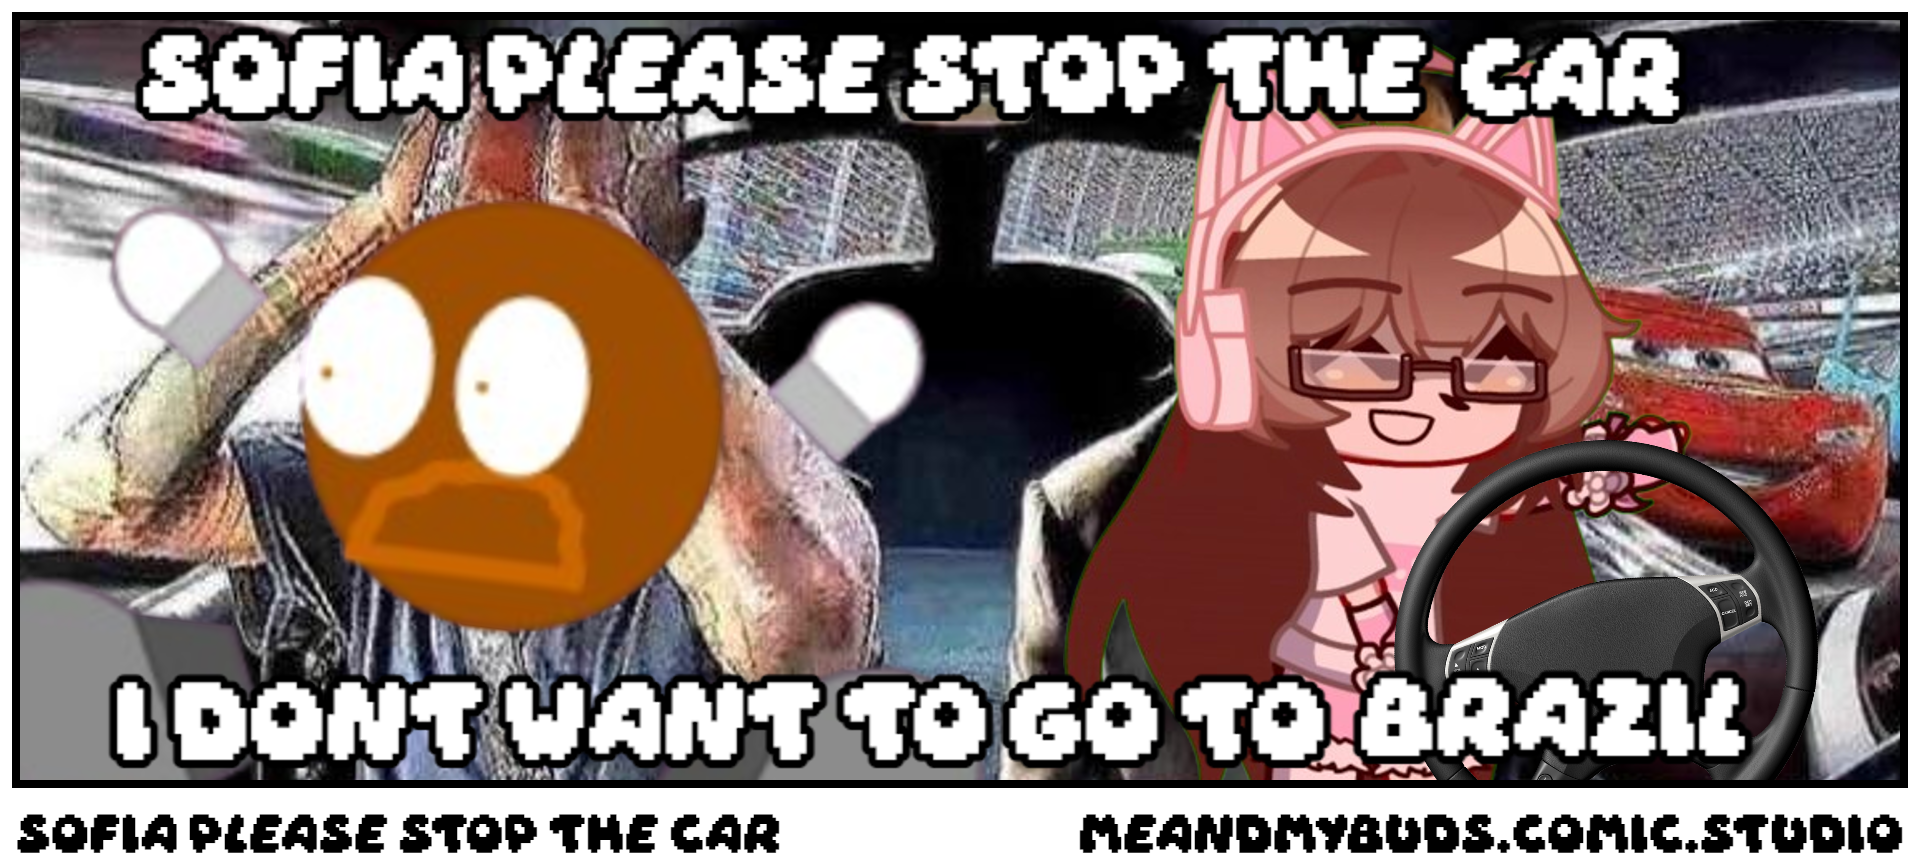 SOFIA PLEASE STOP THE CAR